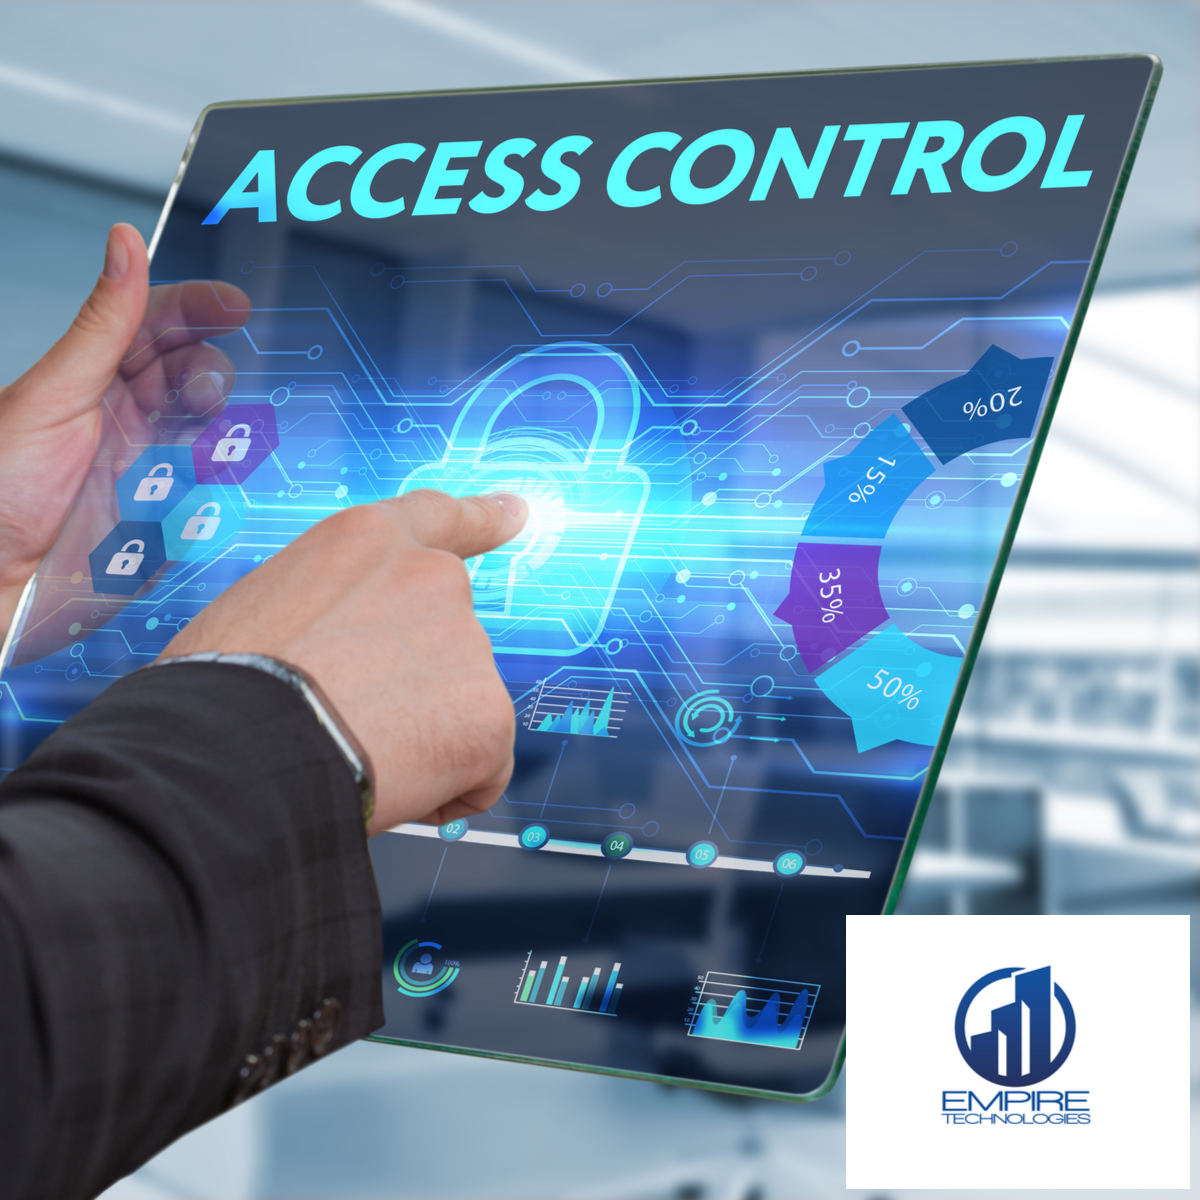 Access Control Services